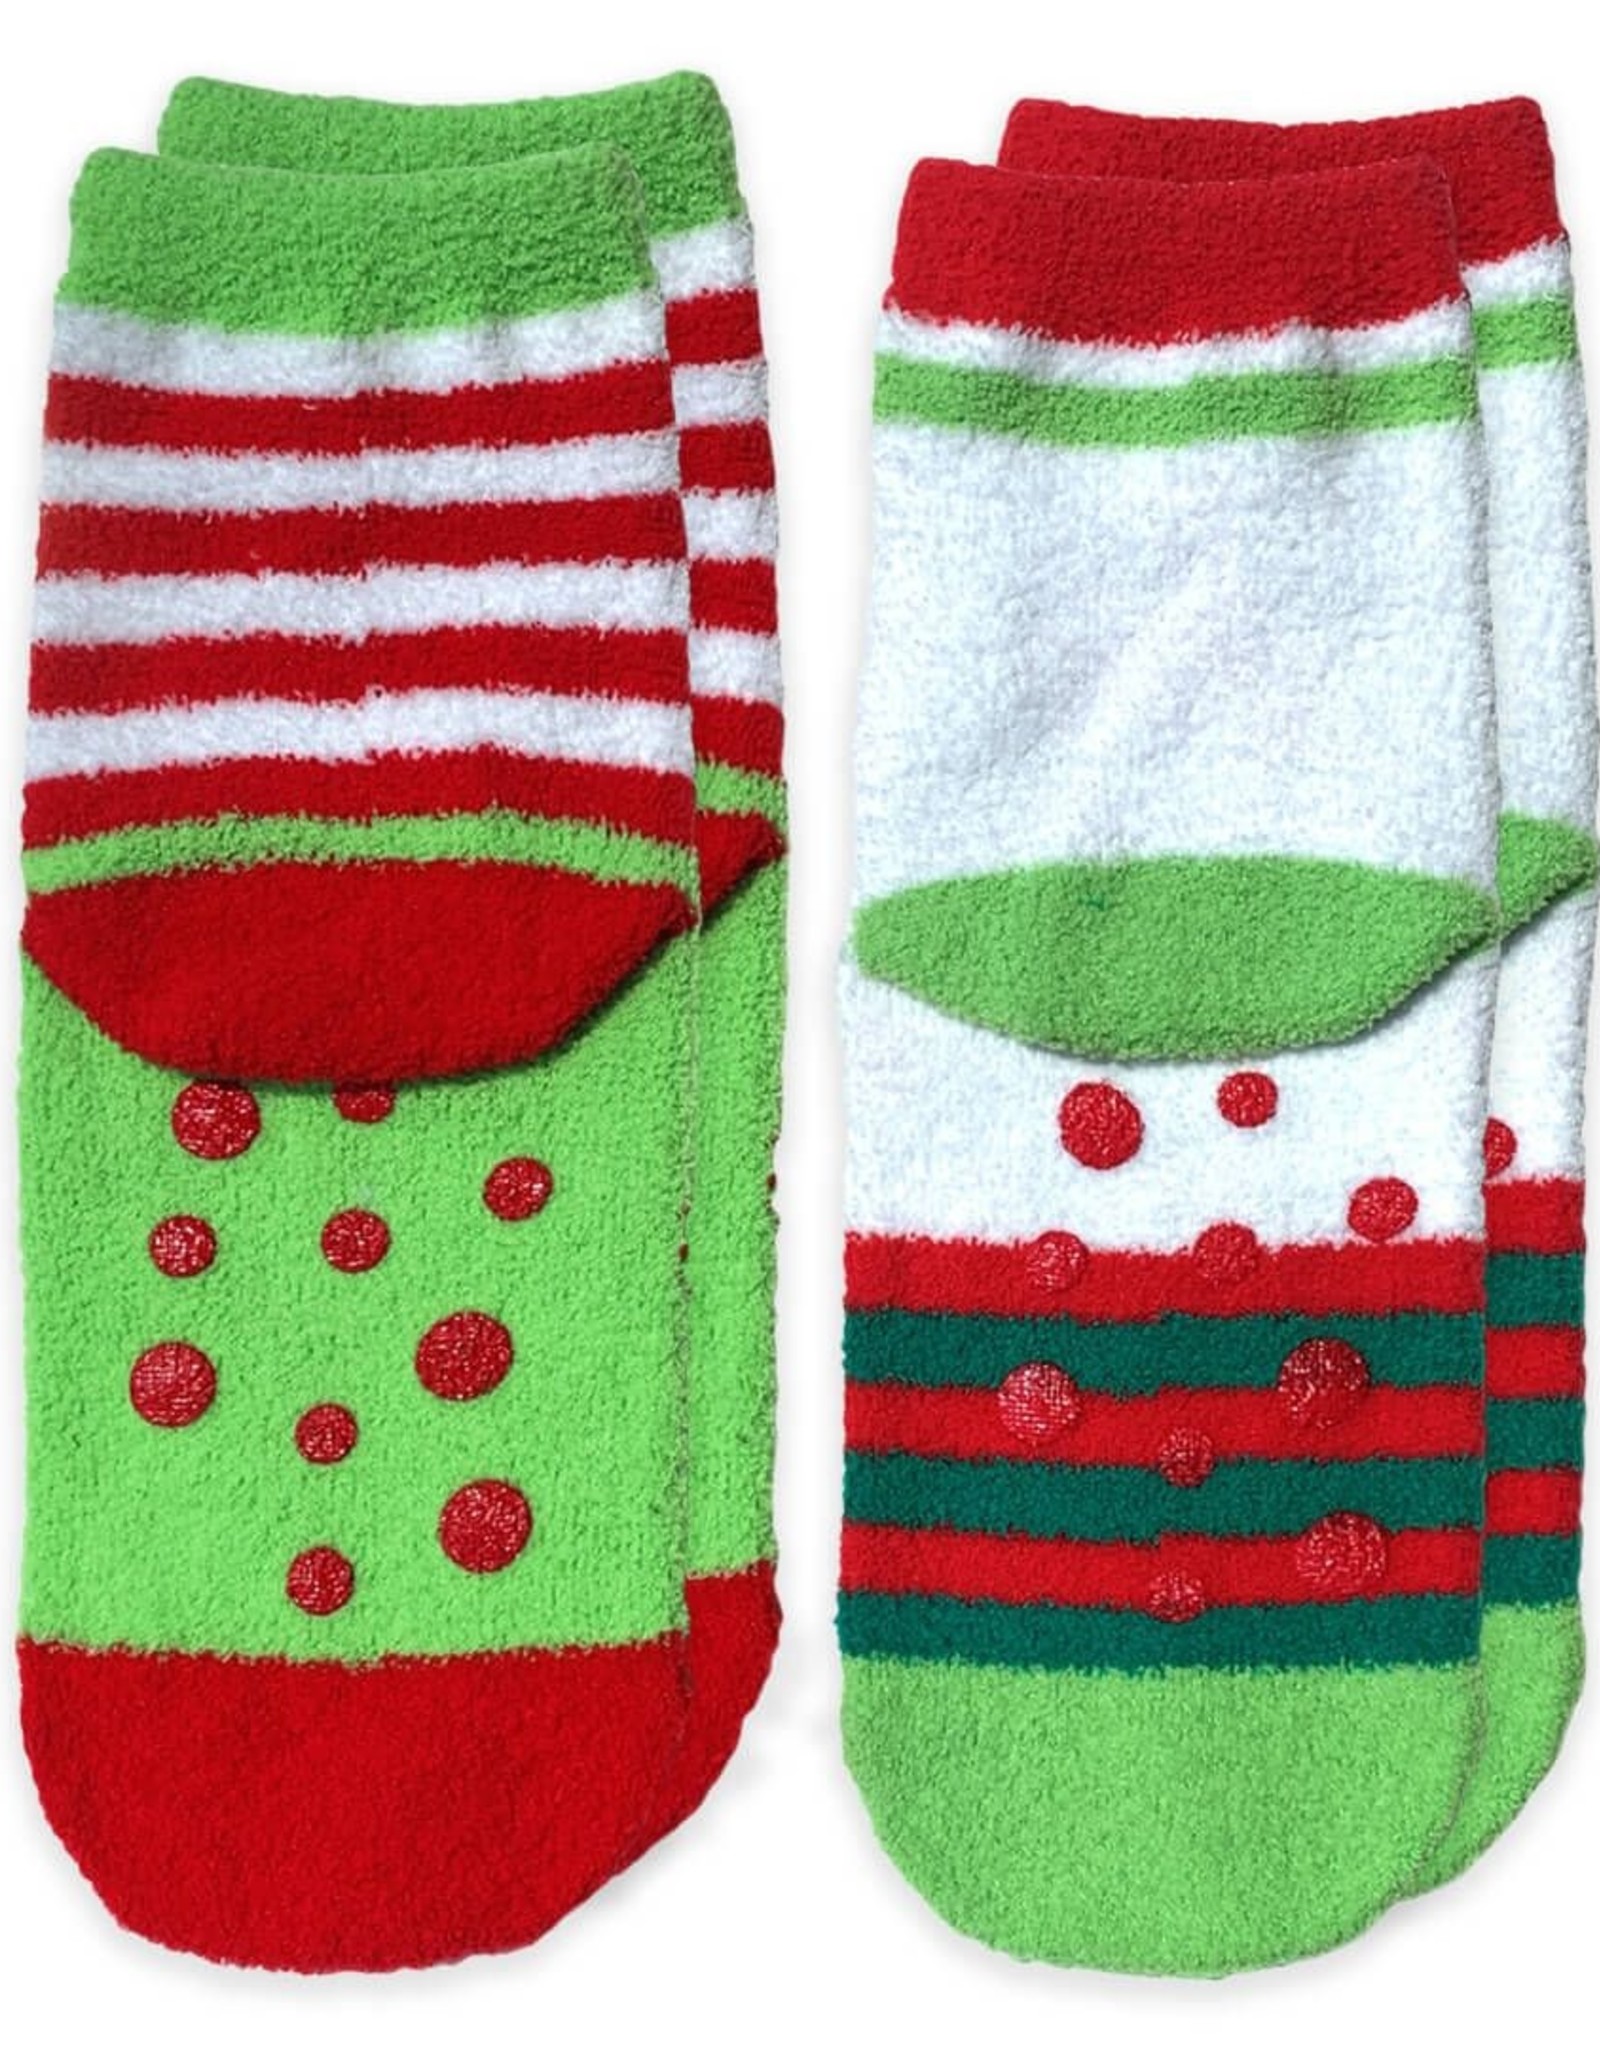 Jefferies Socks Unicorn and Rainbow Fuzzy Non-Skid Slipper Socks 2 Pair Pack